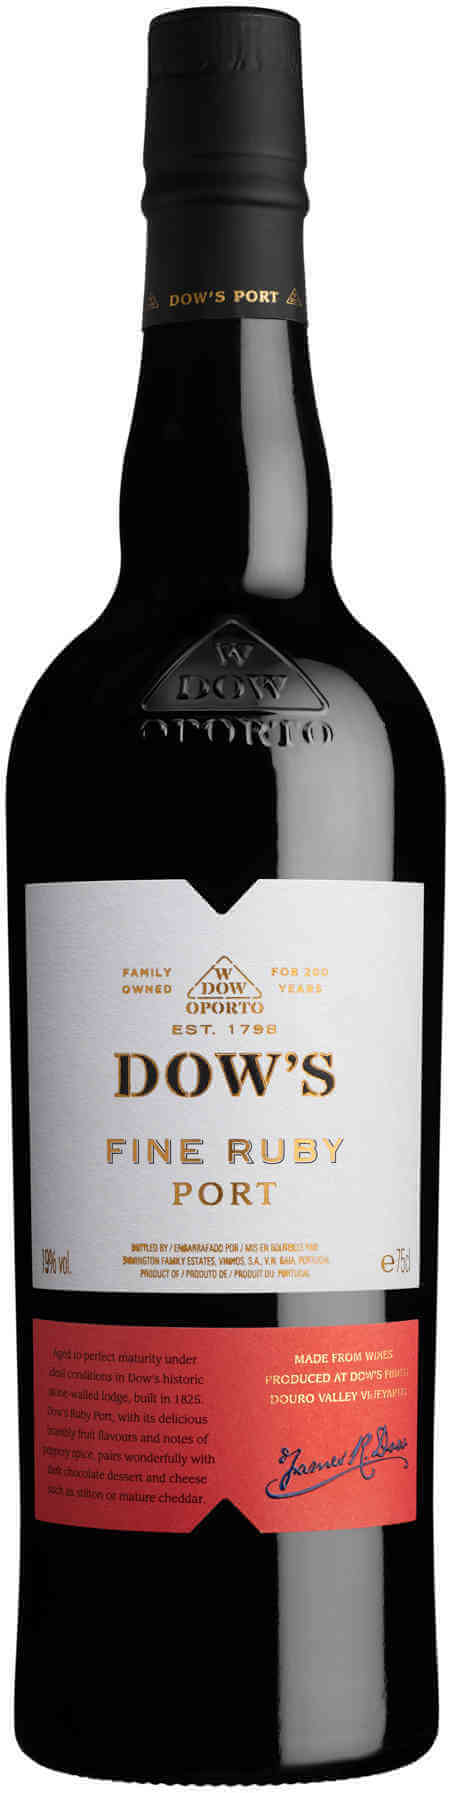 Dows-Fine-Ruby-Port